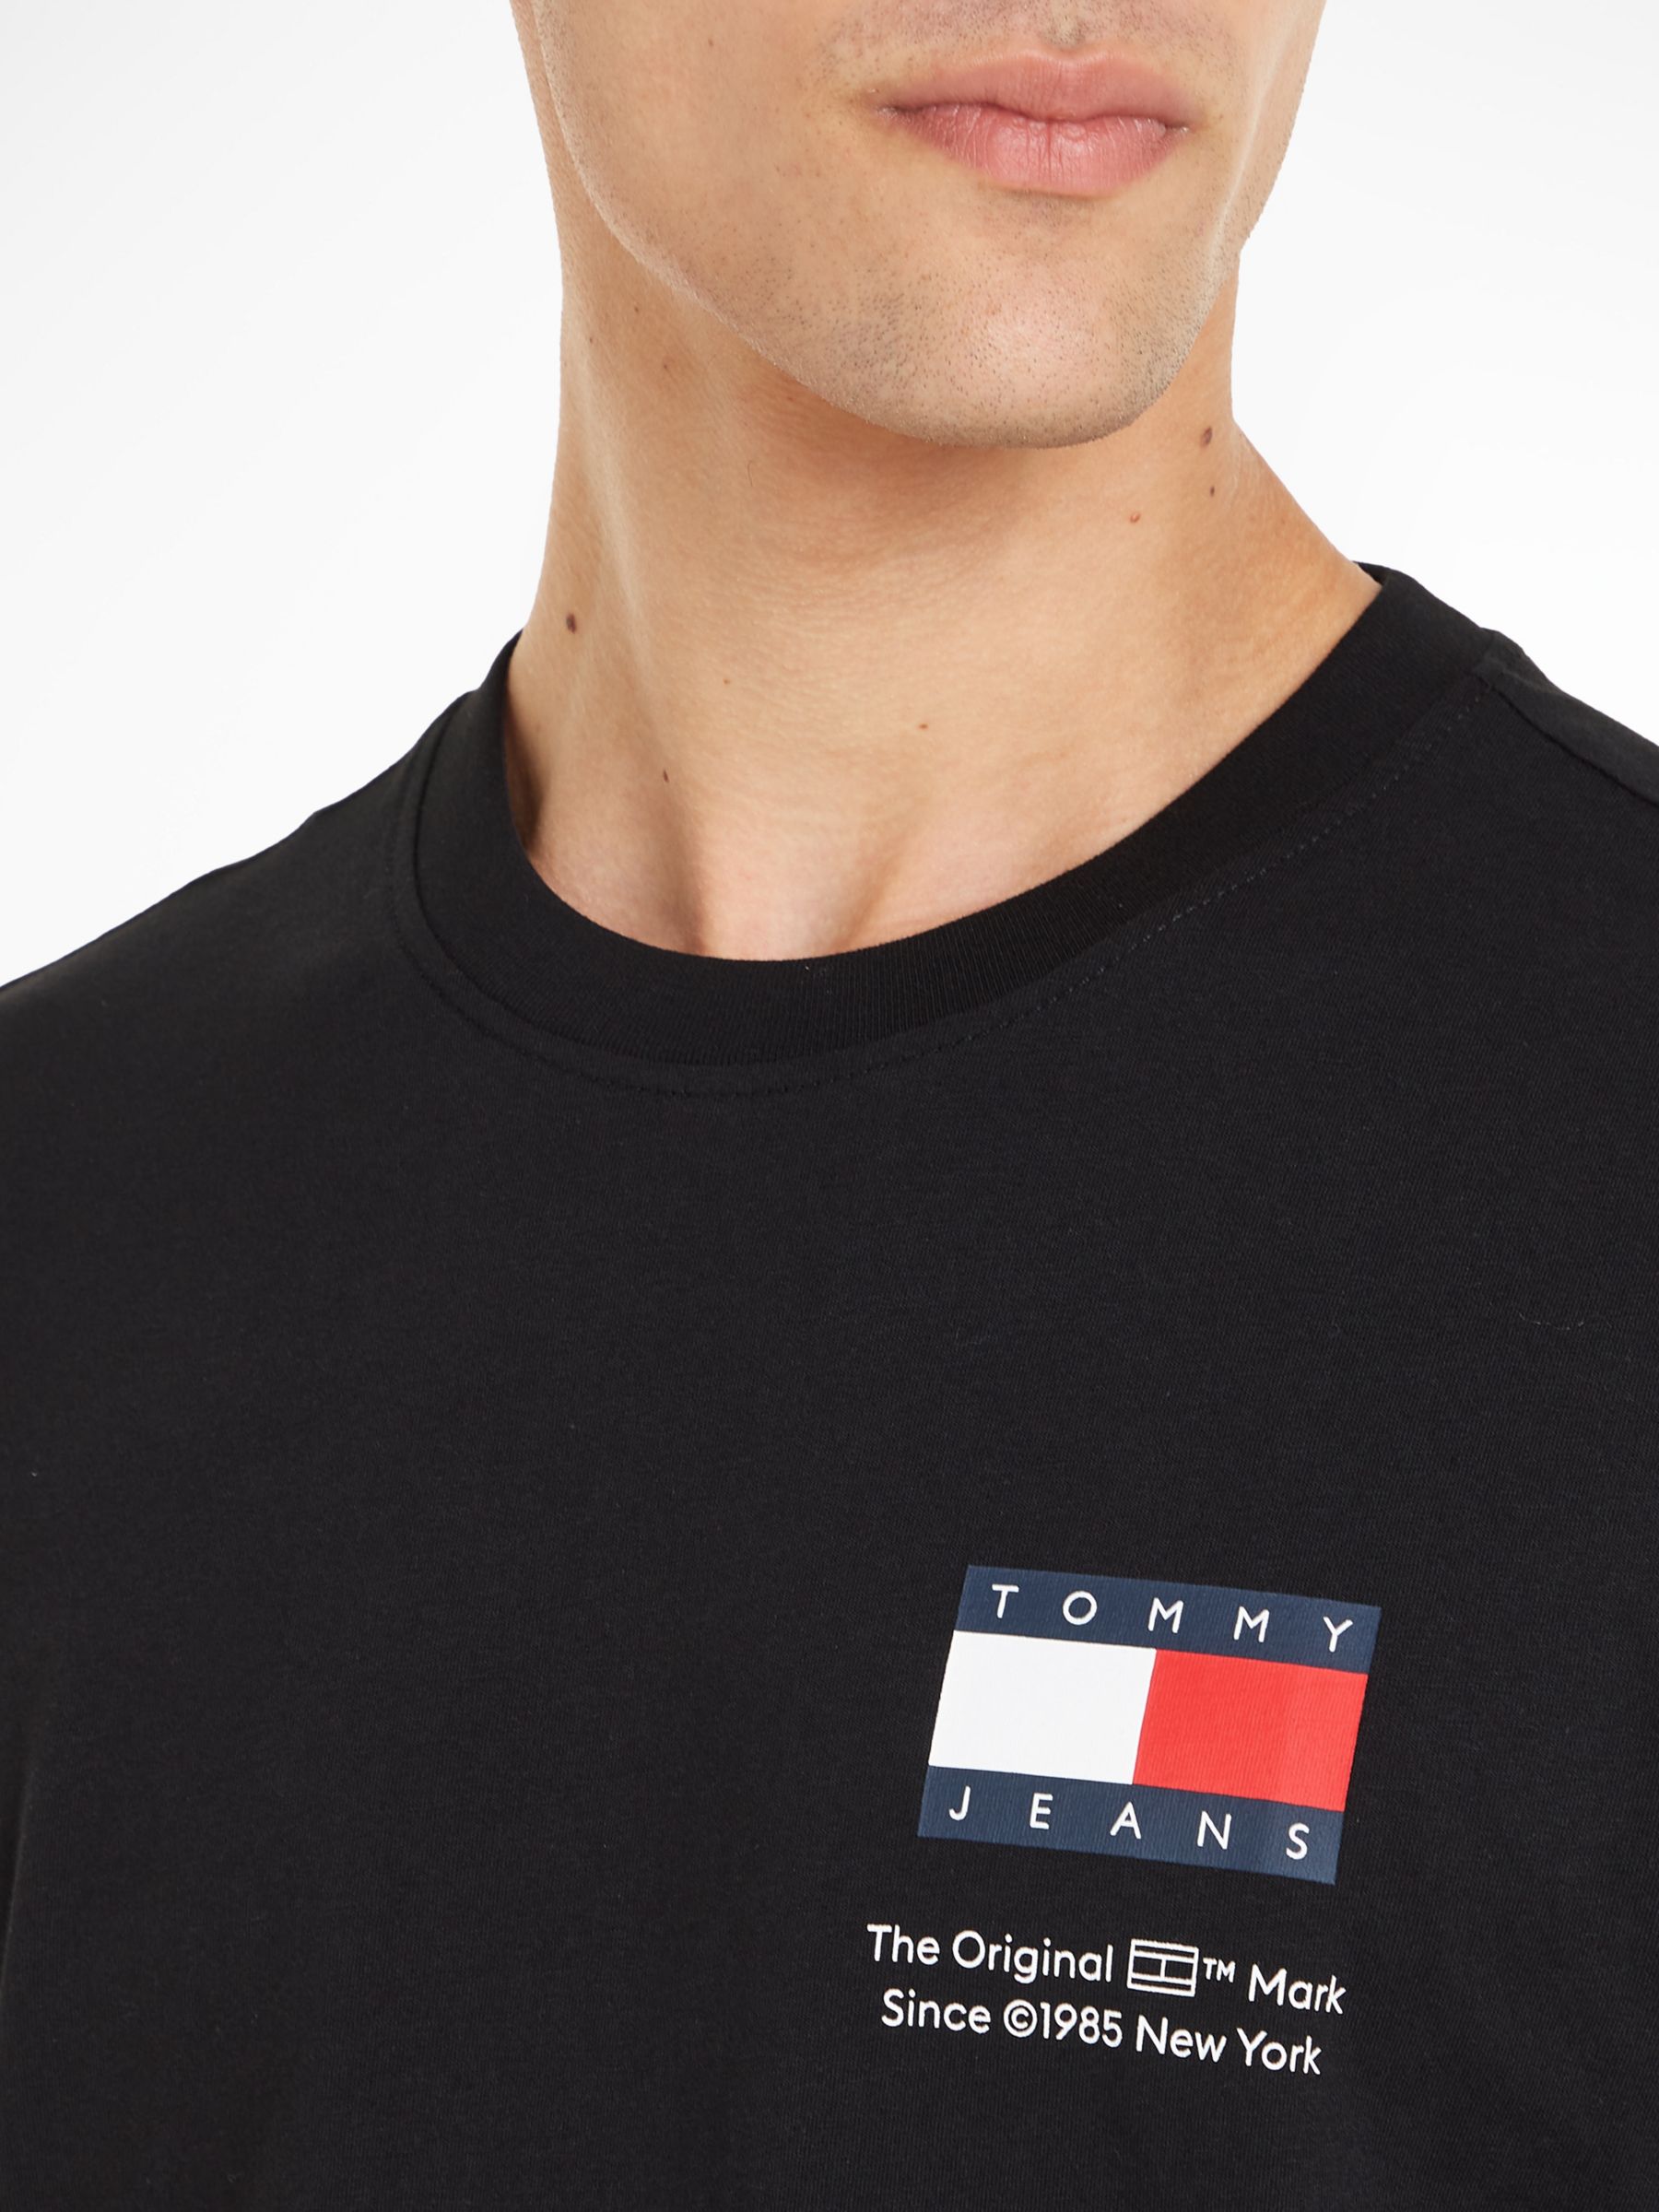 Tommy Jeans Slim Essential Flag T-Shirt, Black, L